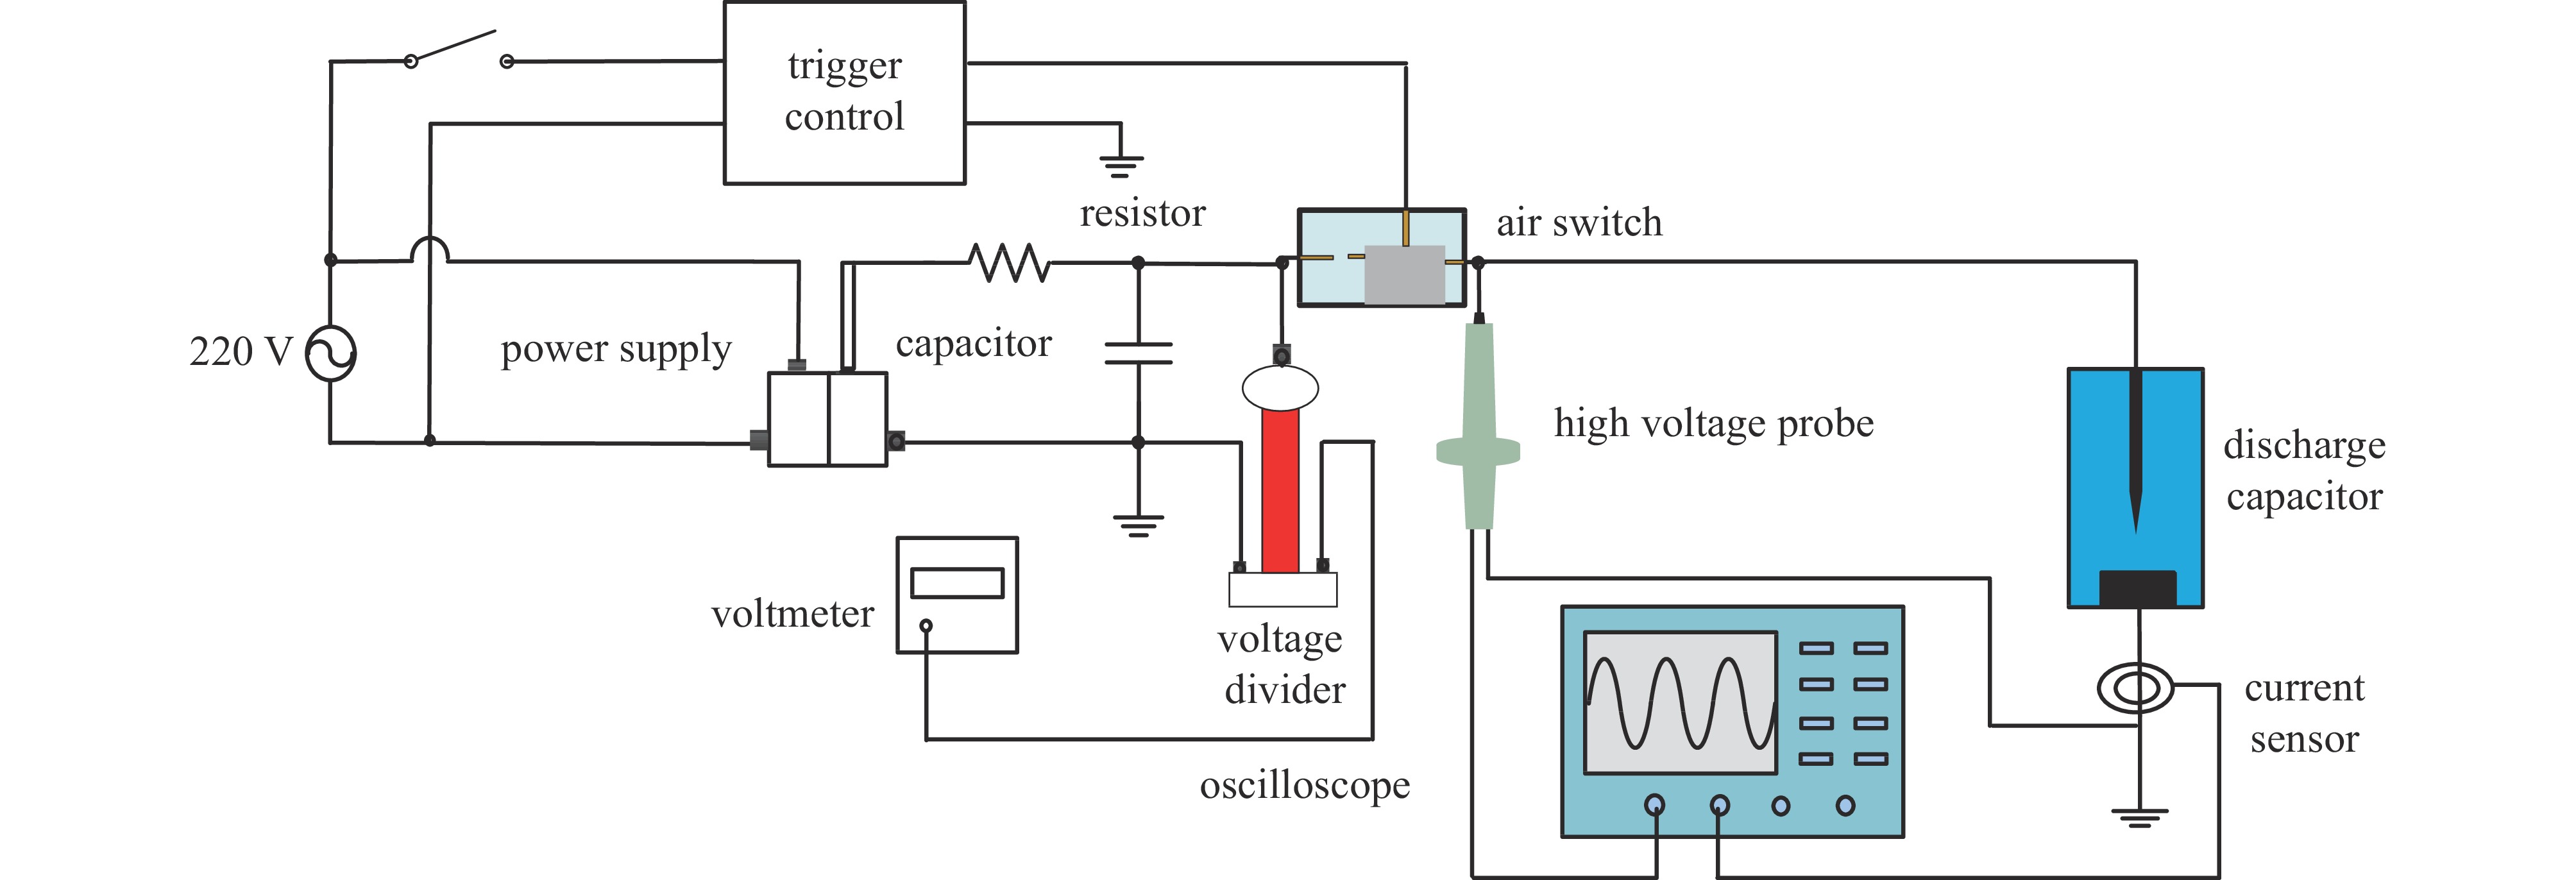 Schematic diagram of underwater high-voltage pulse discharge experiment system